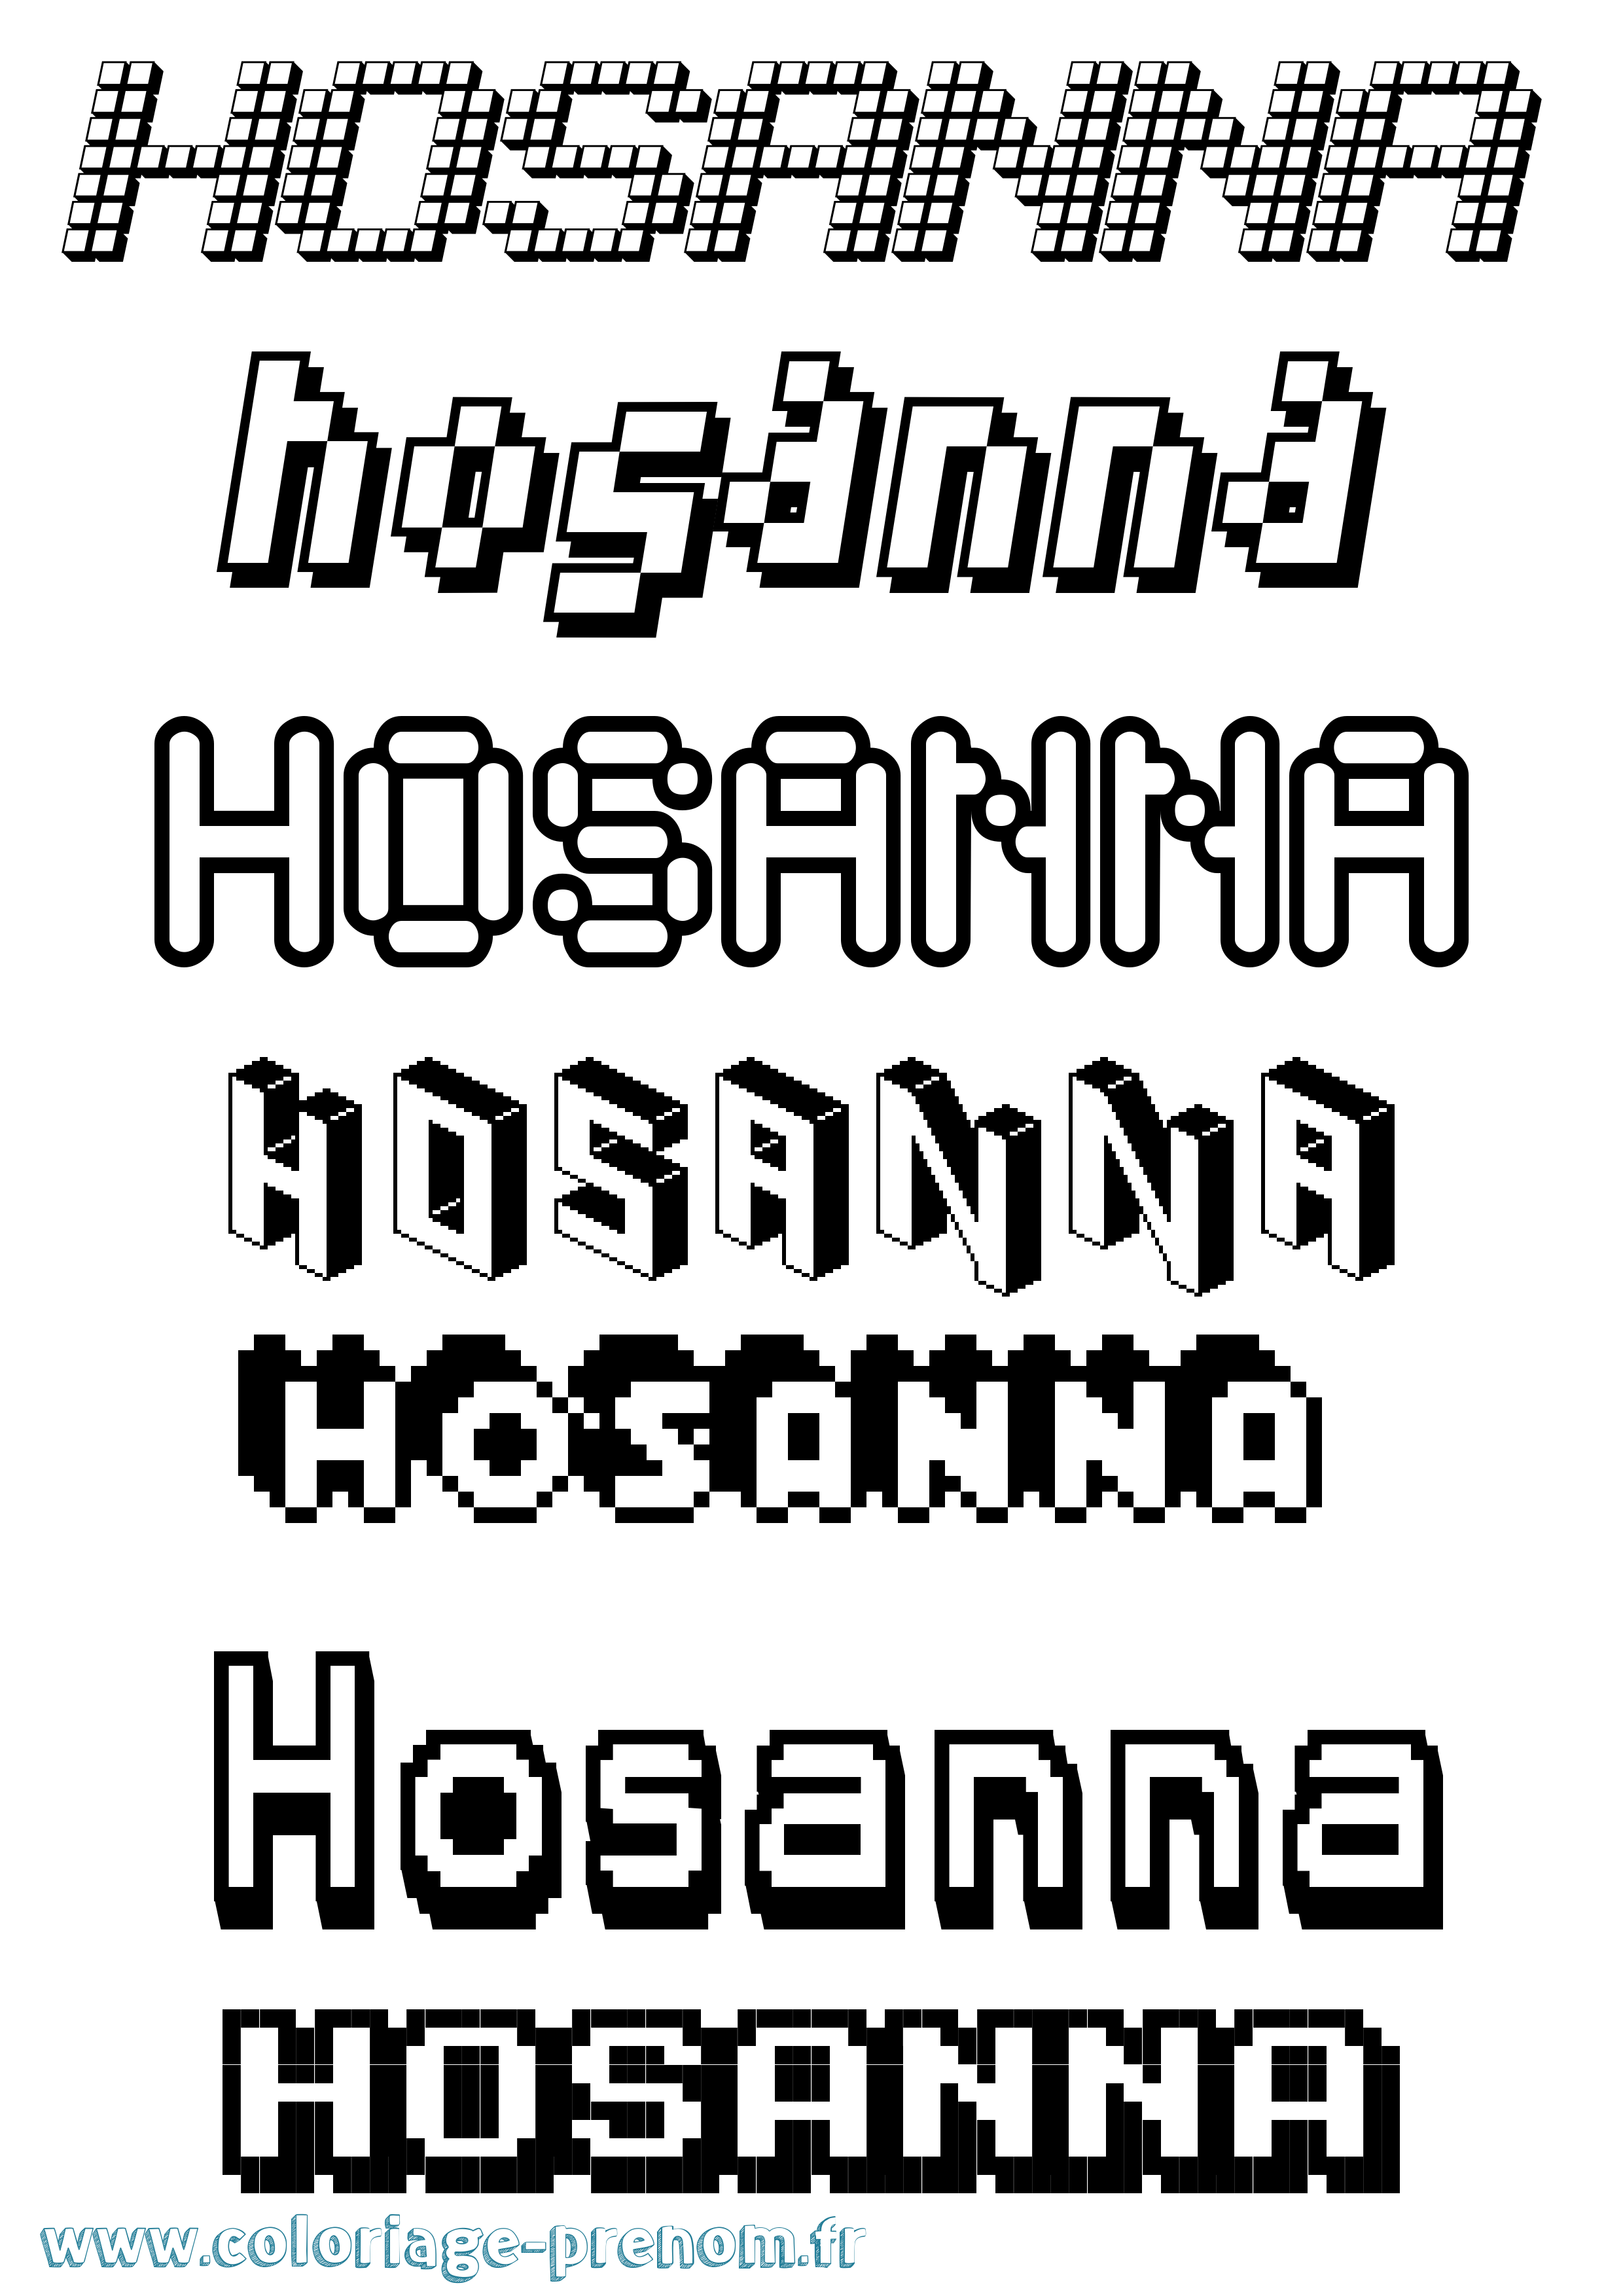 Coloriage prénom Hosanna Pixel